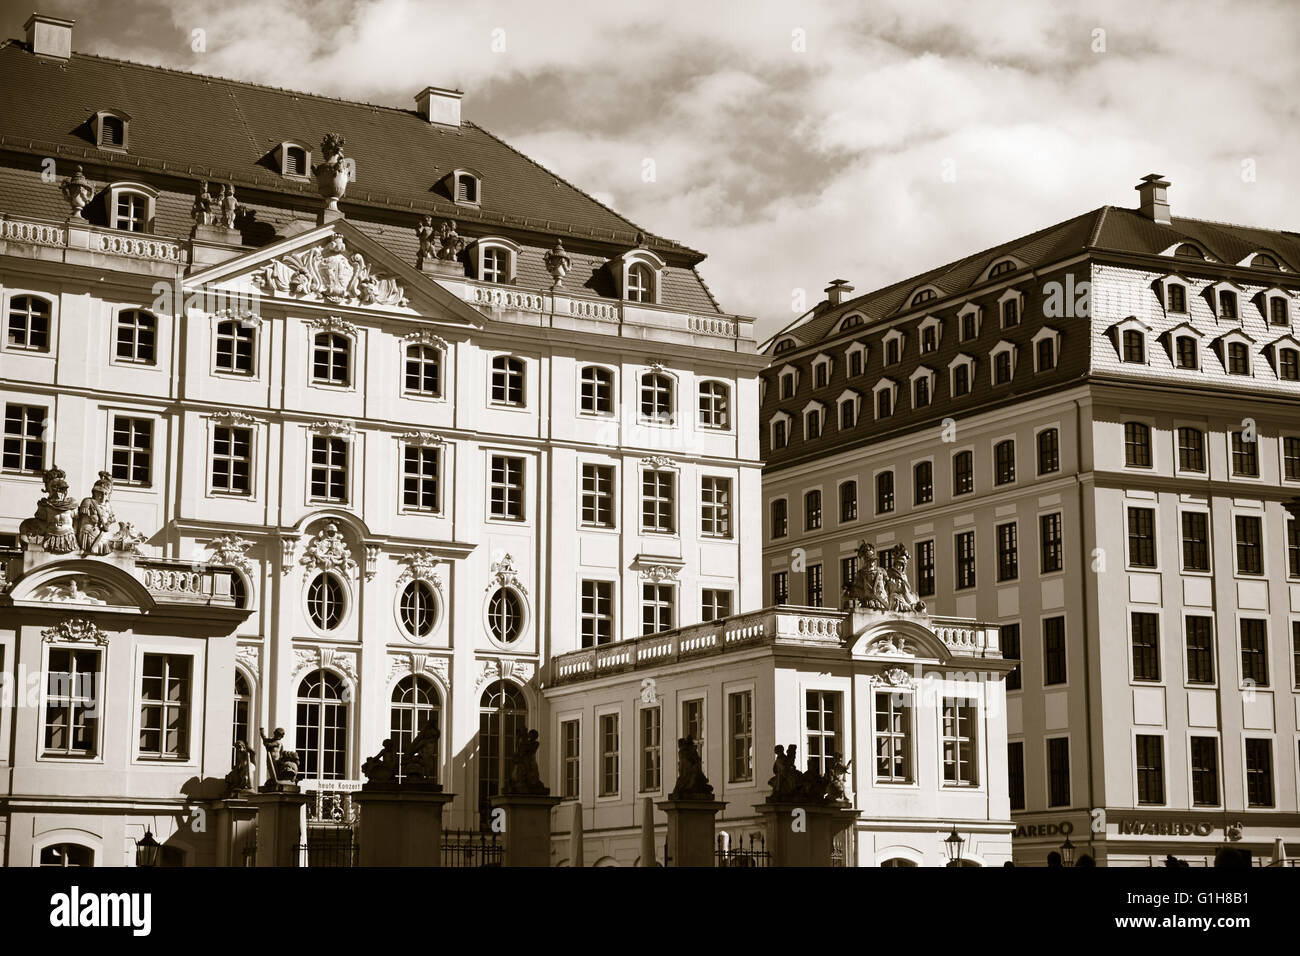 Altstadt, sanierten Fassaden, Barockbau, Dresden, Deutschland Stockfoto